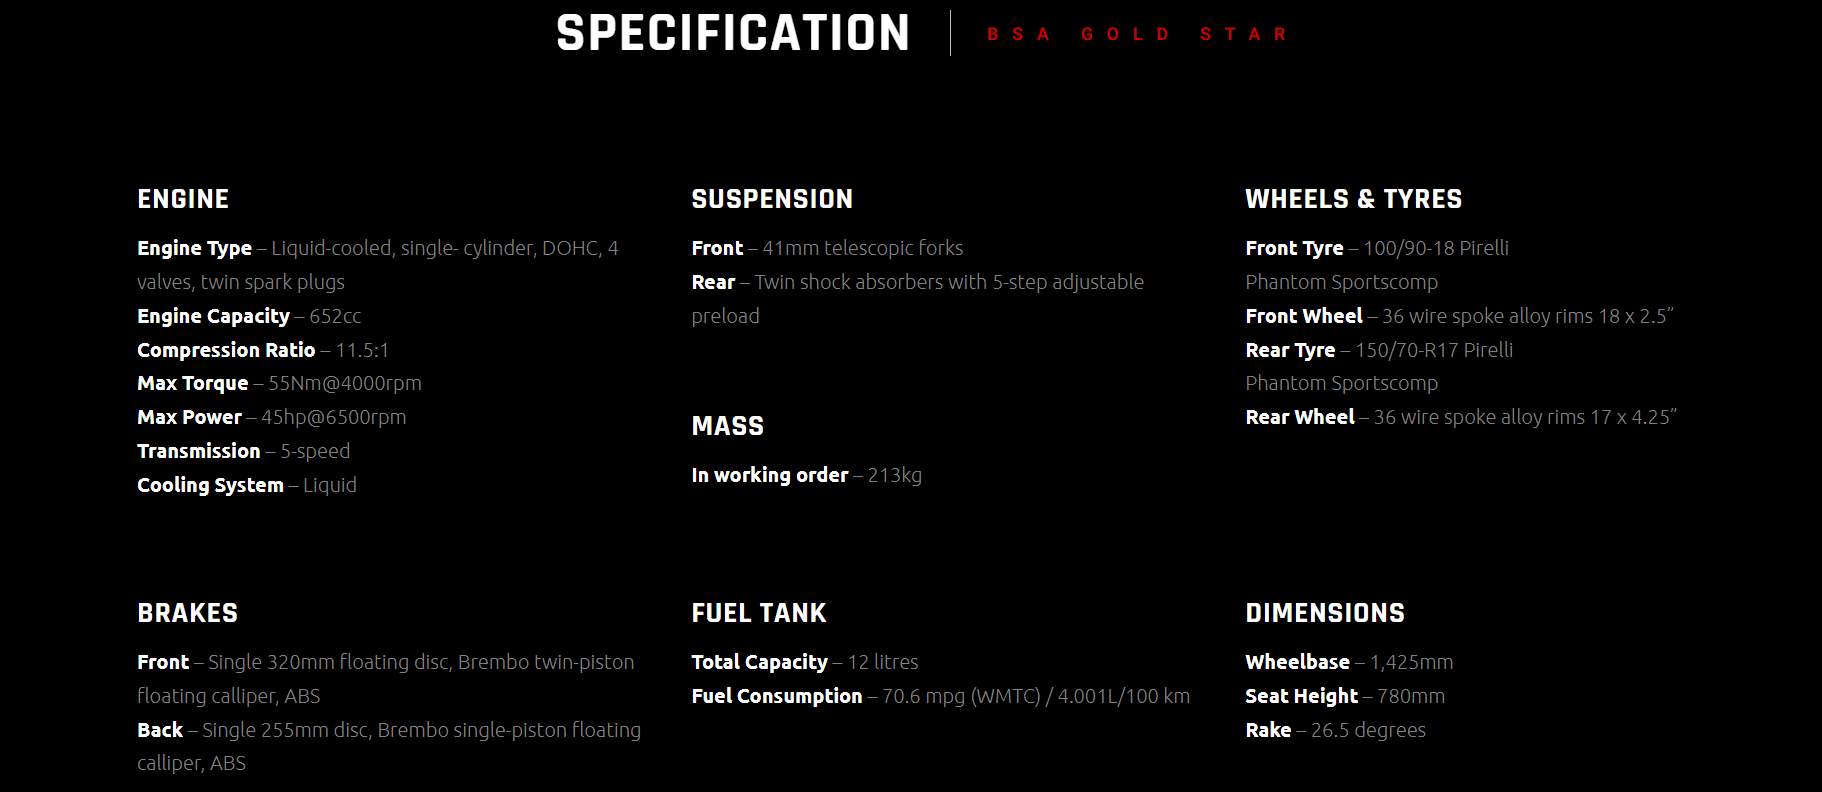 BSA Gold Star Specification